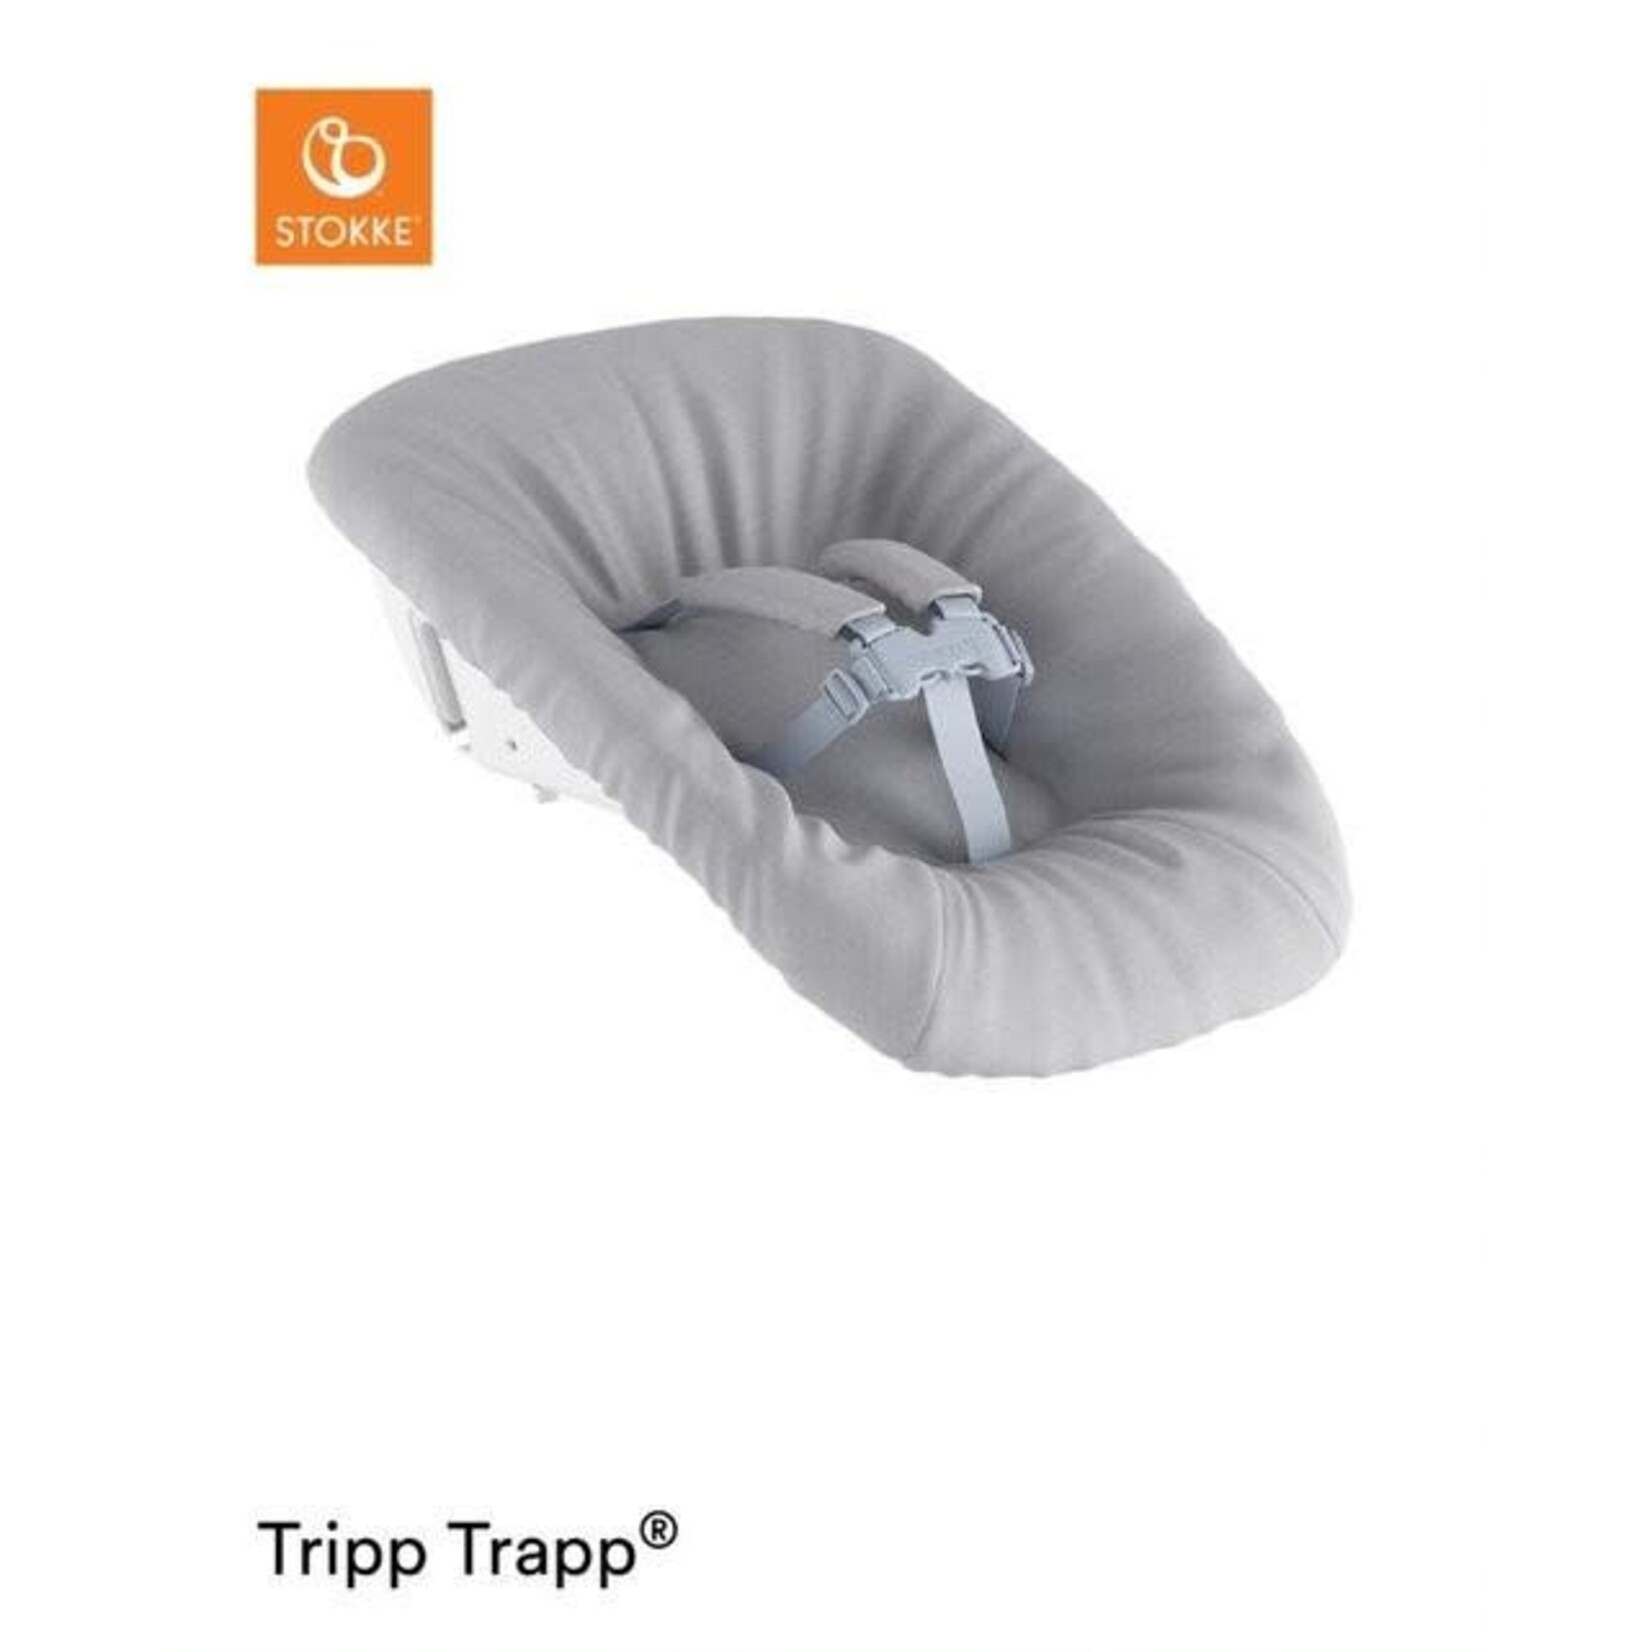 Stokke Stokke - Tripp Trapp Newborn set - Grey